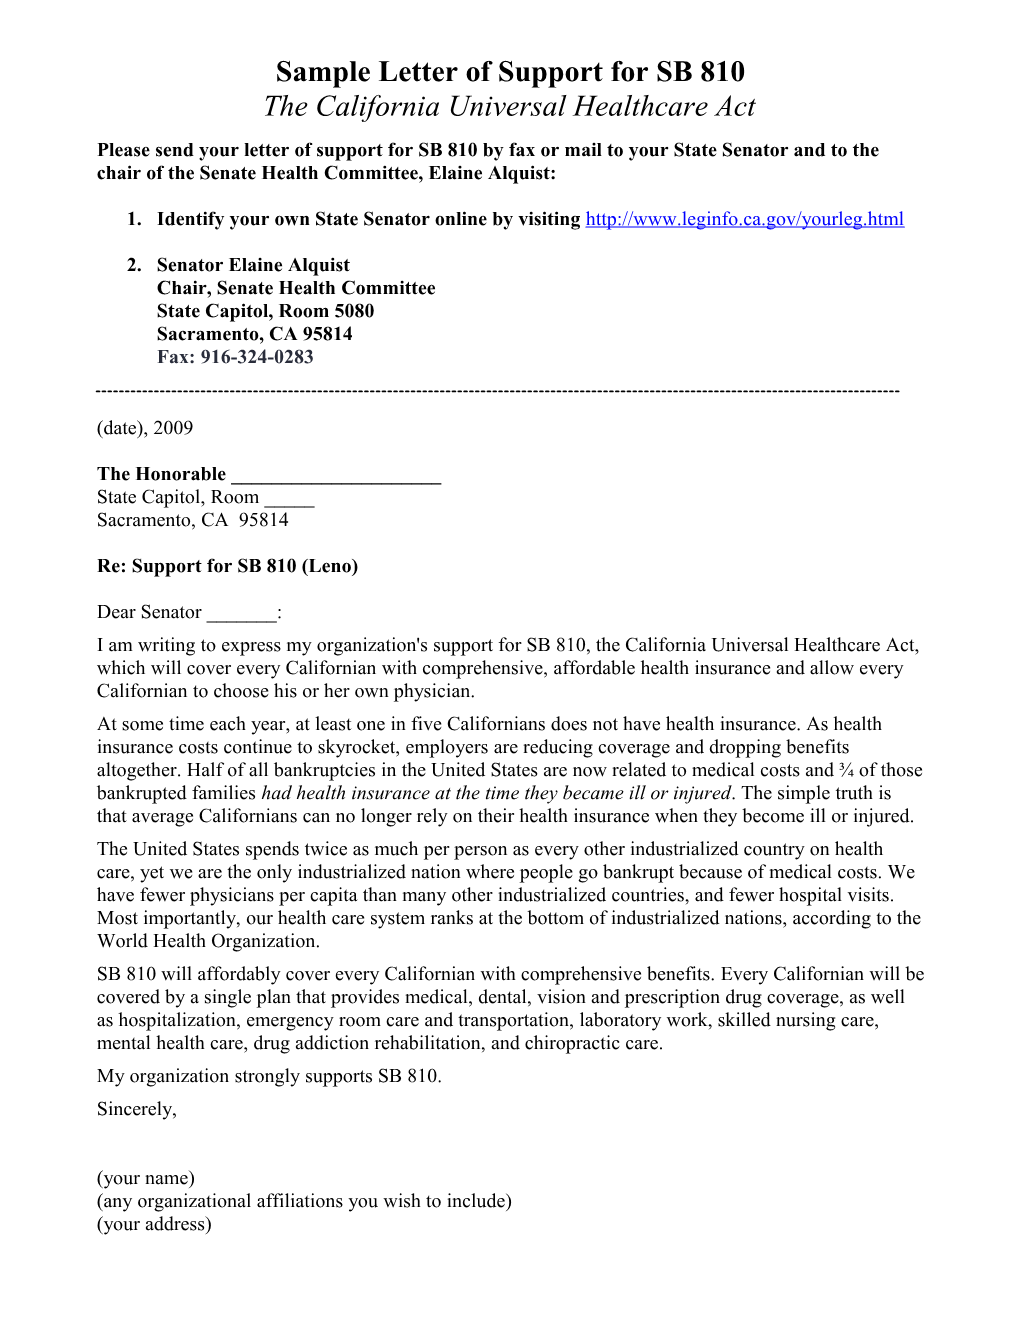 Organizational Sample Letter of Support for SB 840